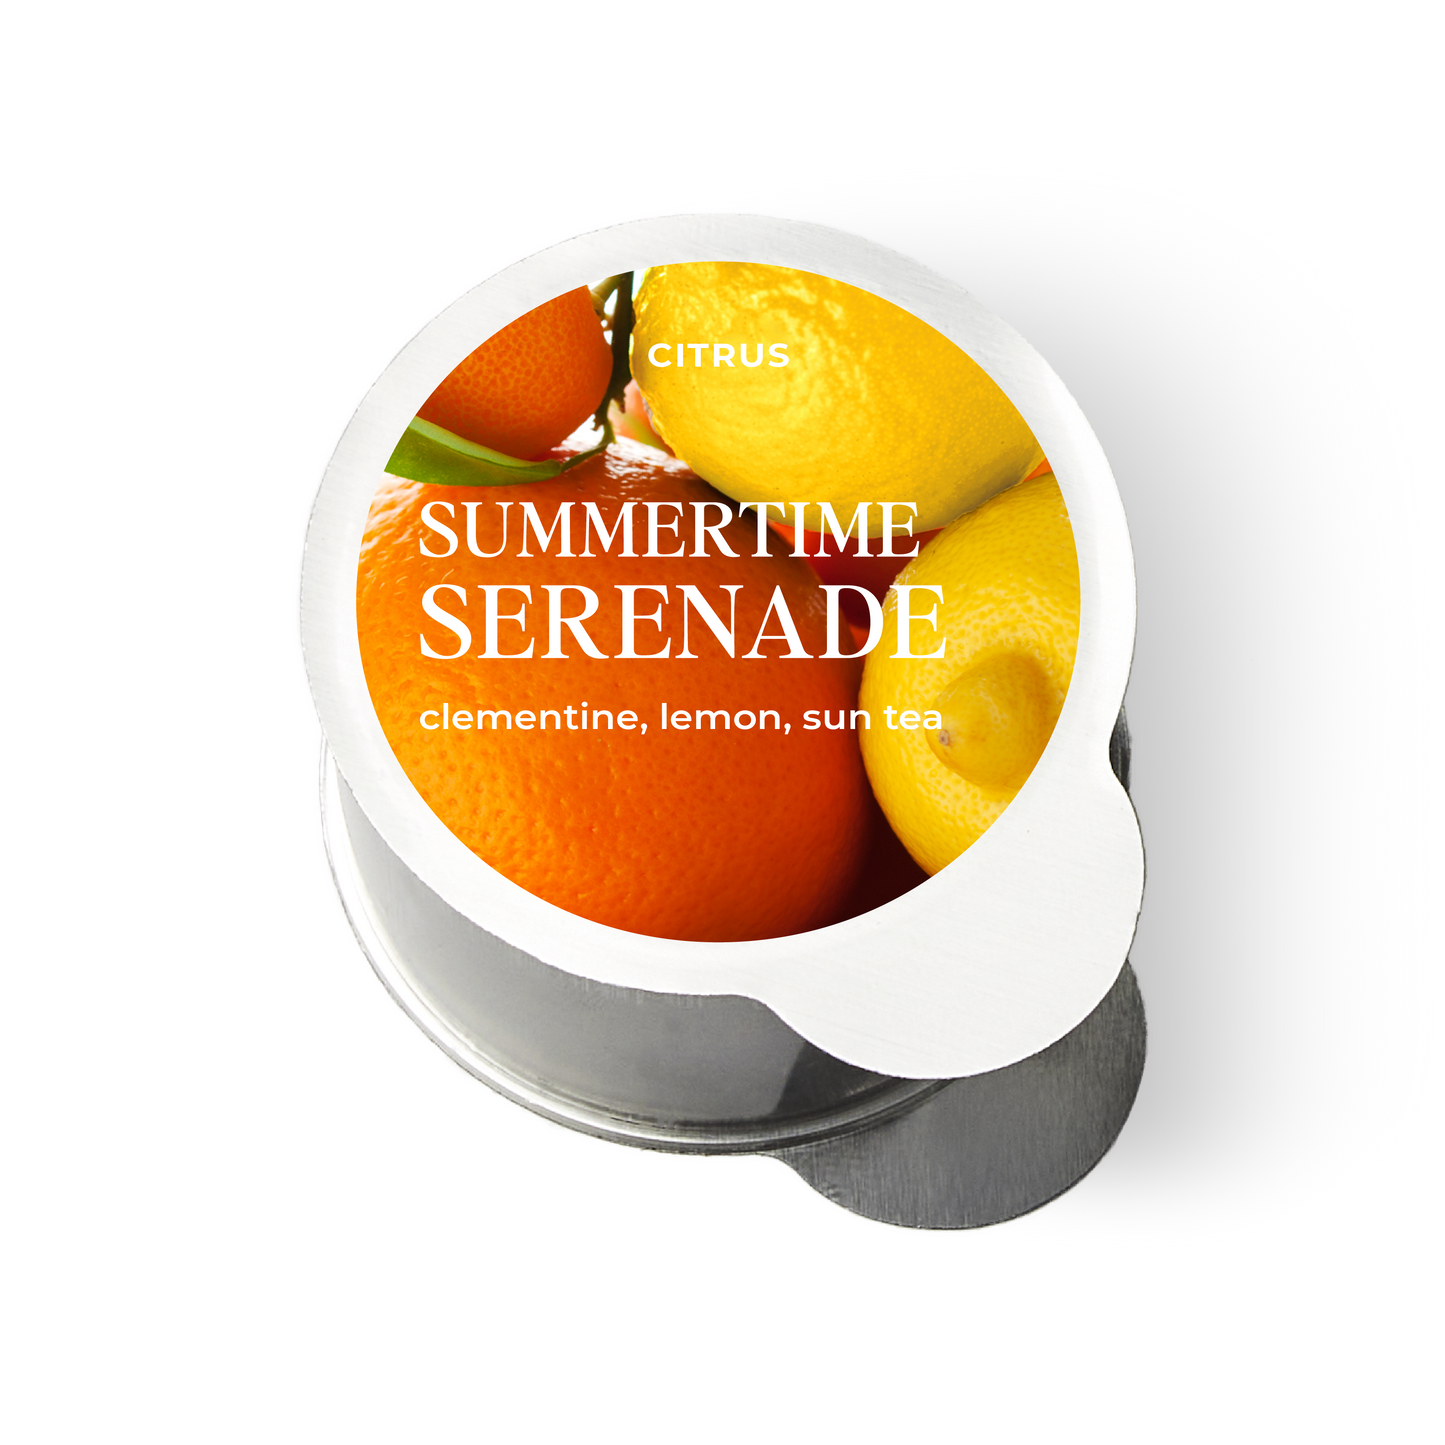 Summertime Serenade - MojiLife Online- The AirMoji